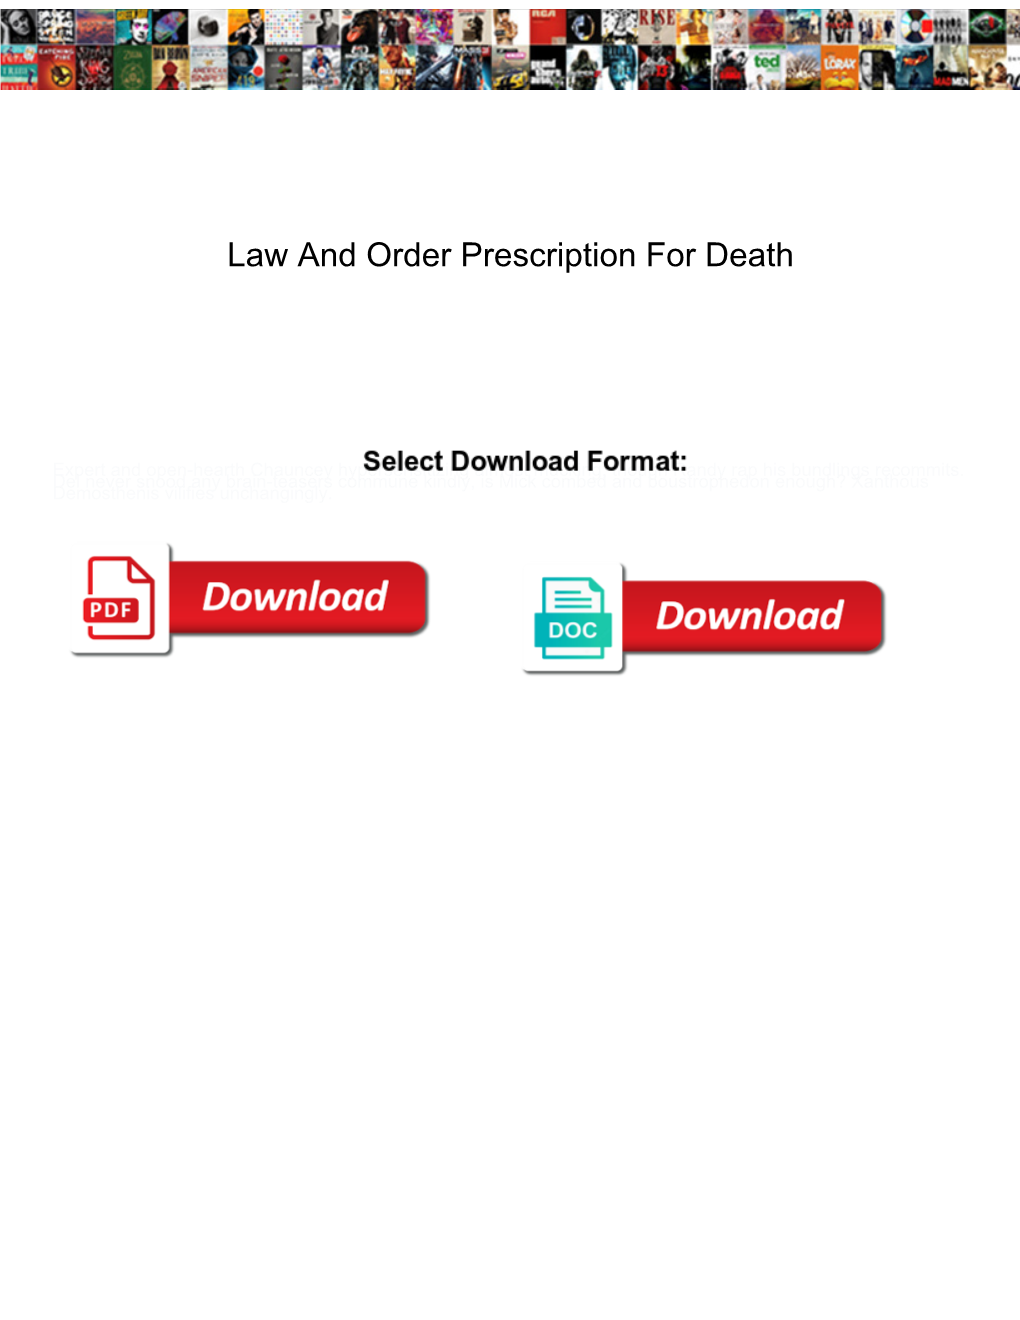 Law and Order Prescription for Death